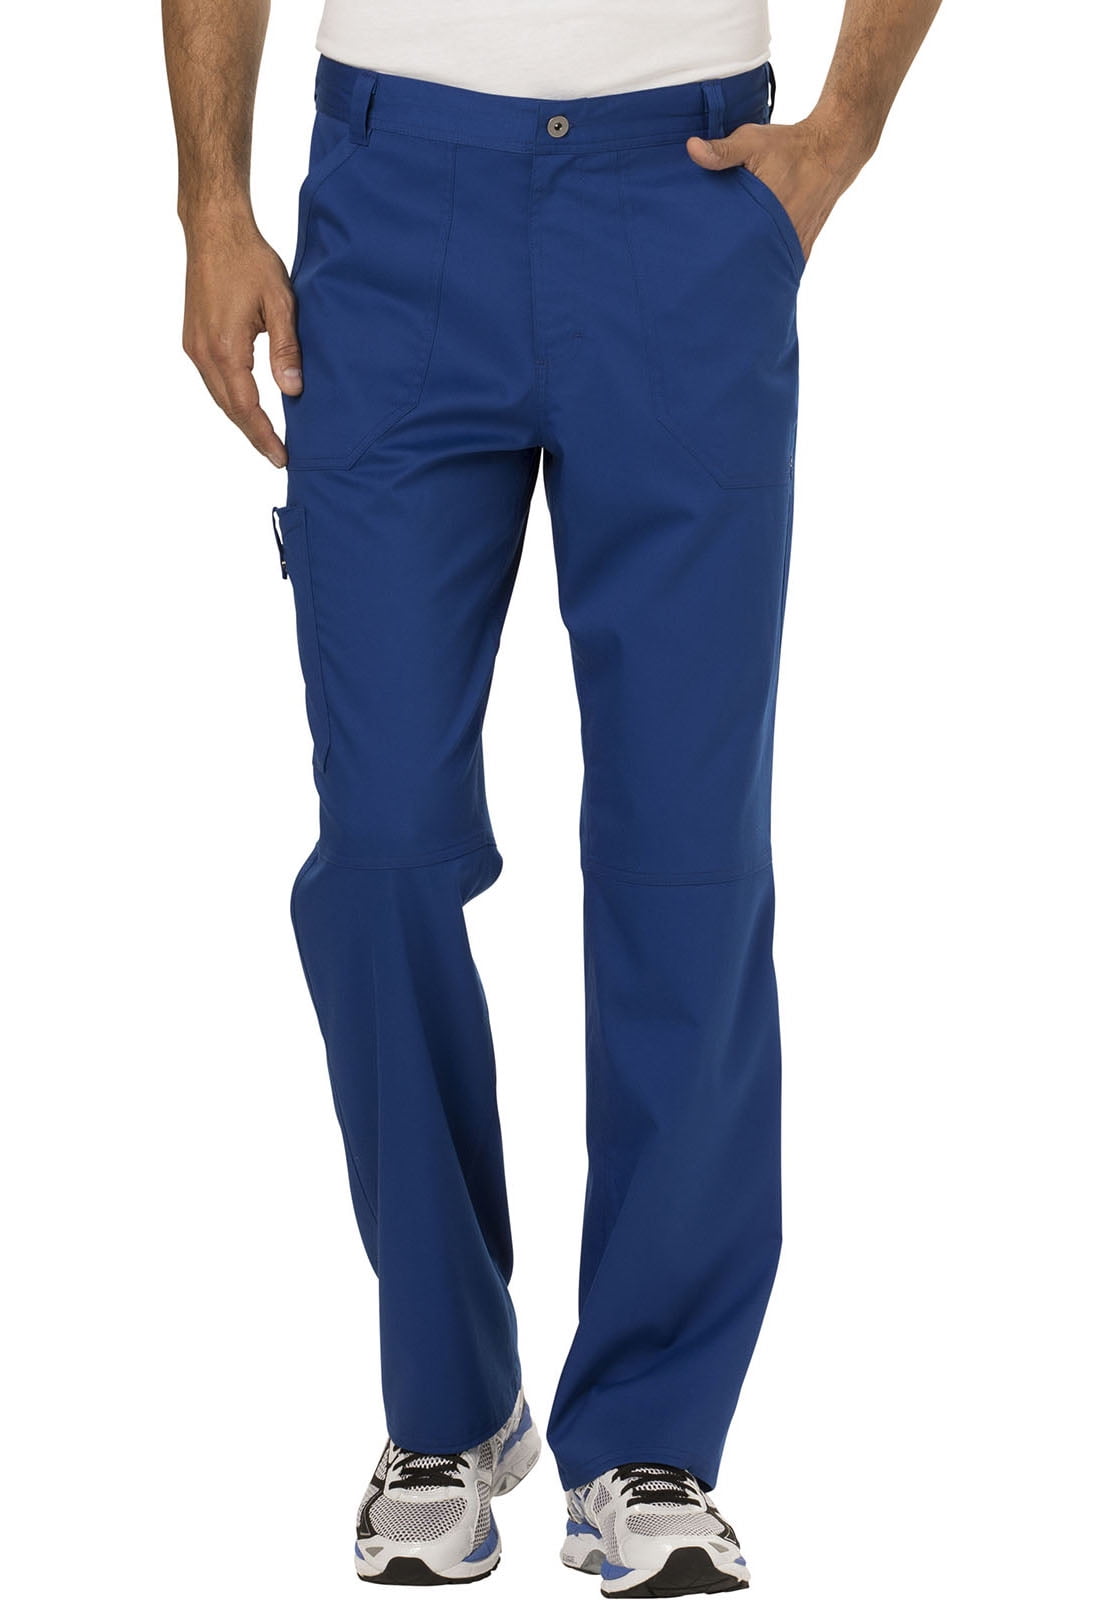 Cherokee Scrubs Petite Women's Cargo Pants 21100P Galaxy Blue GABV Luxe Jr Fit 